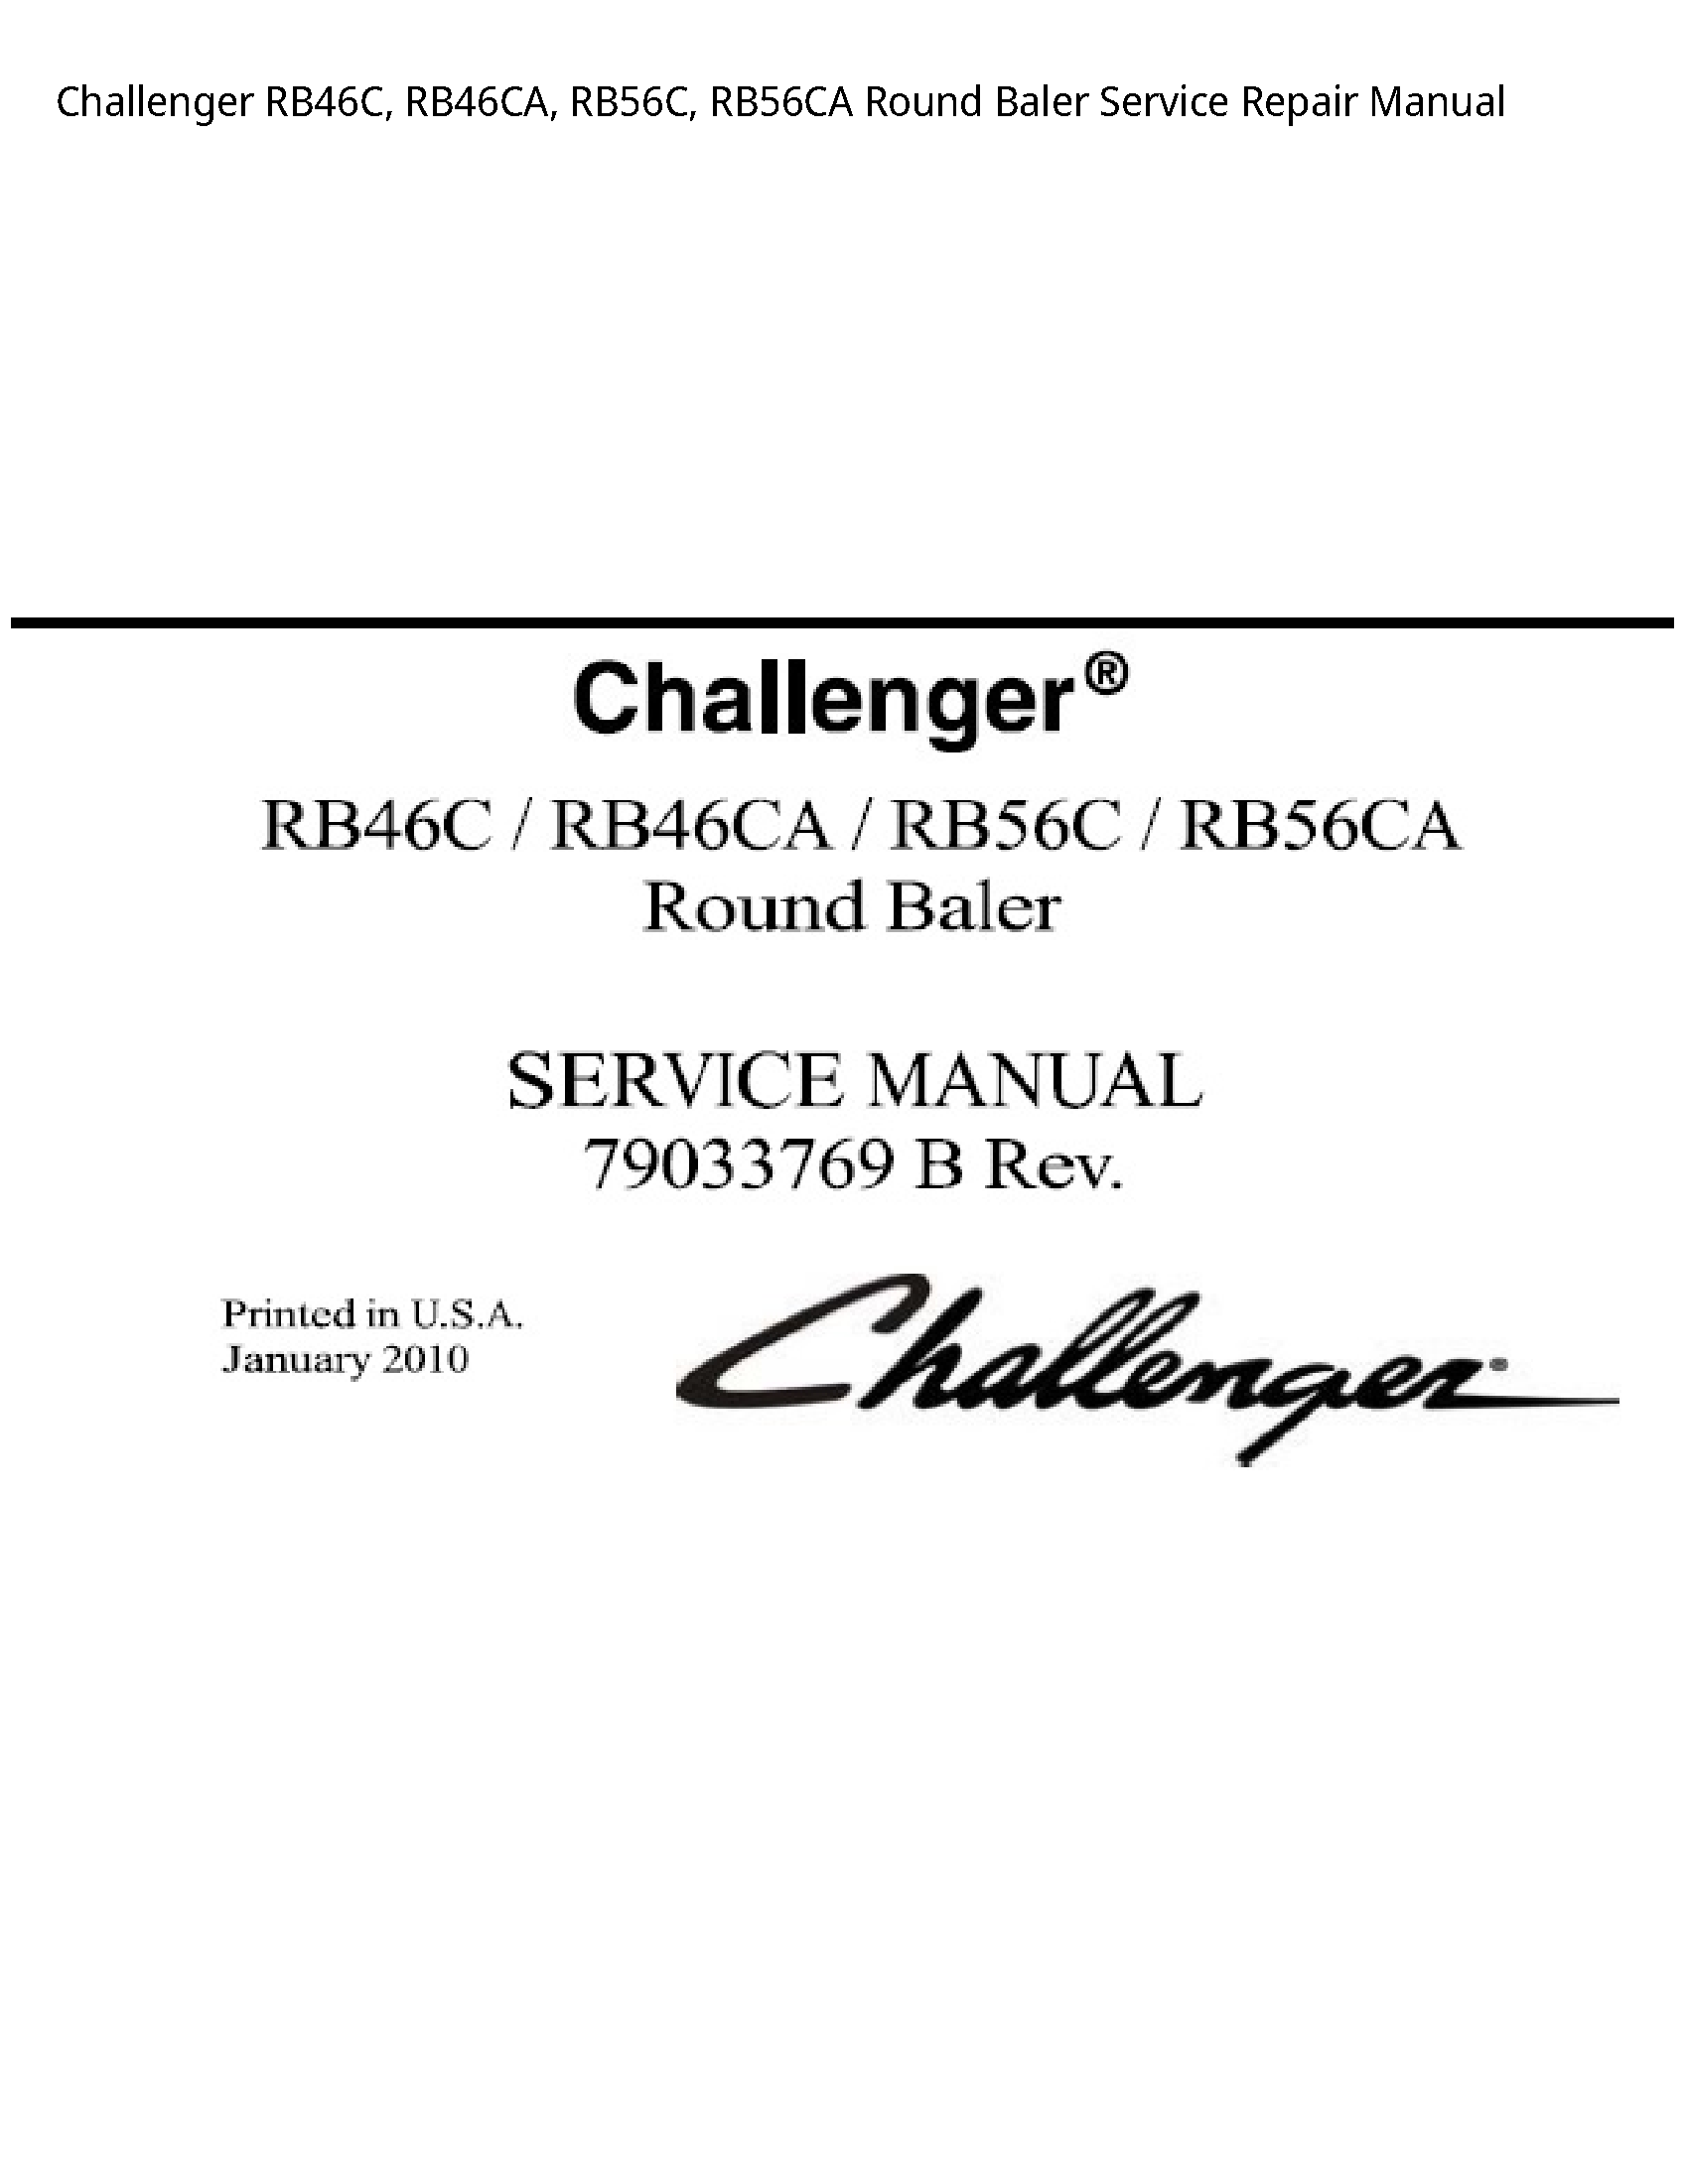 Challenger RB46C Round Baler manual